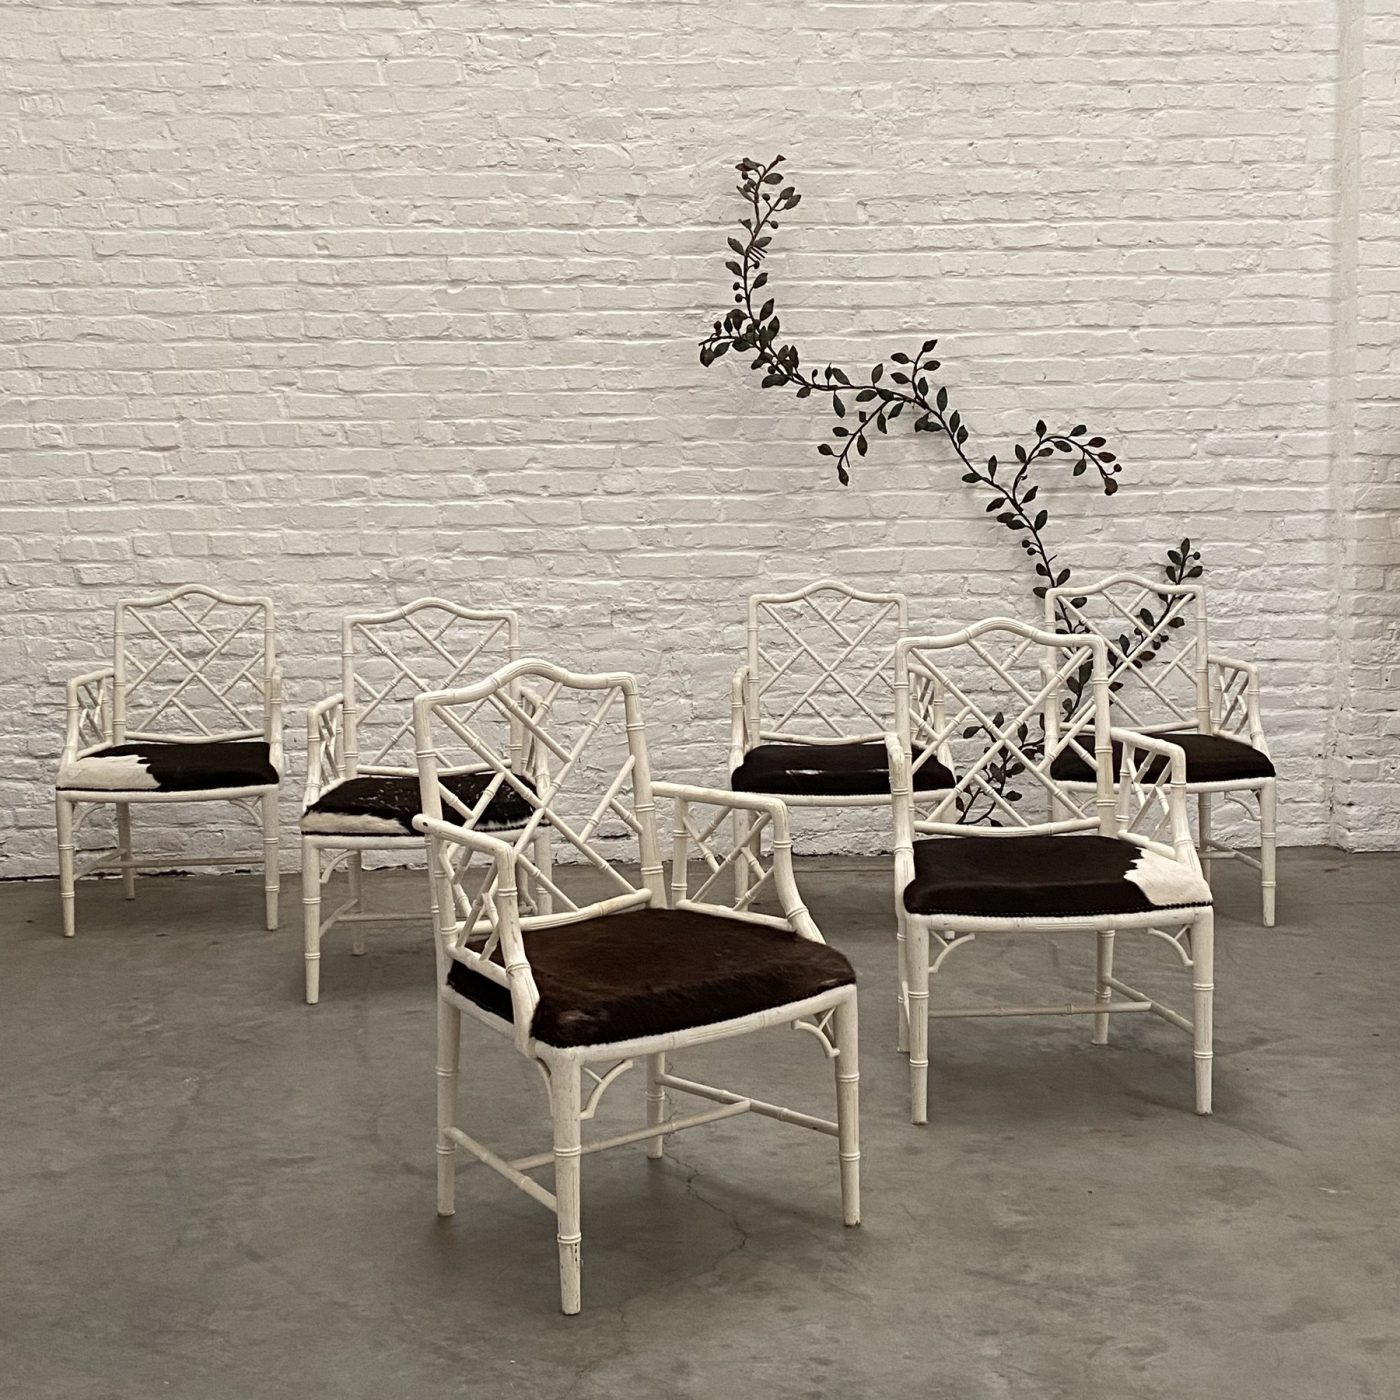 objet-vagabond-bamboo-armchairs0004